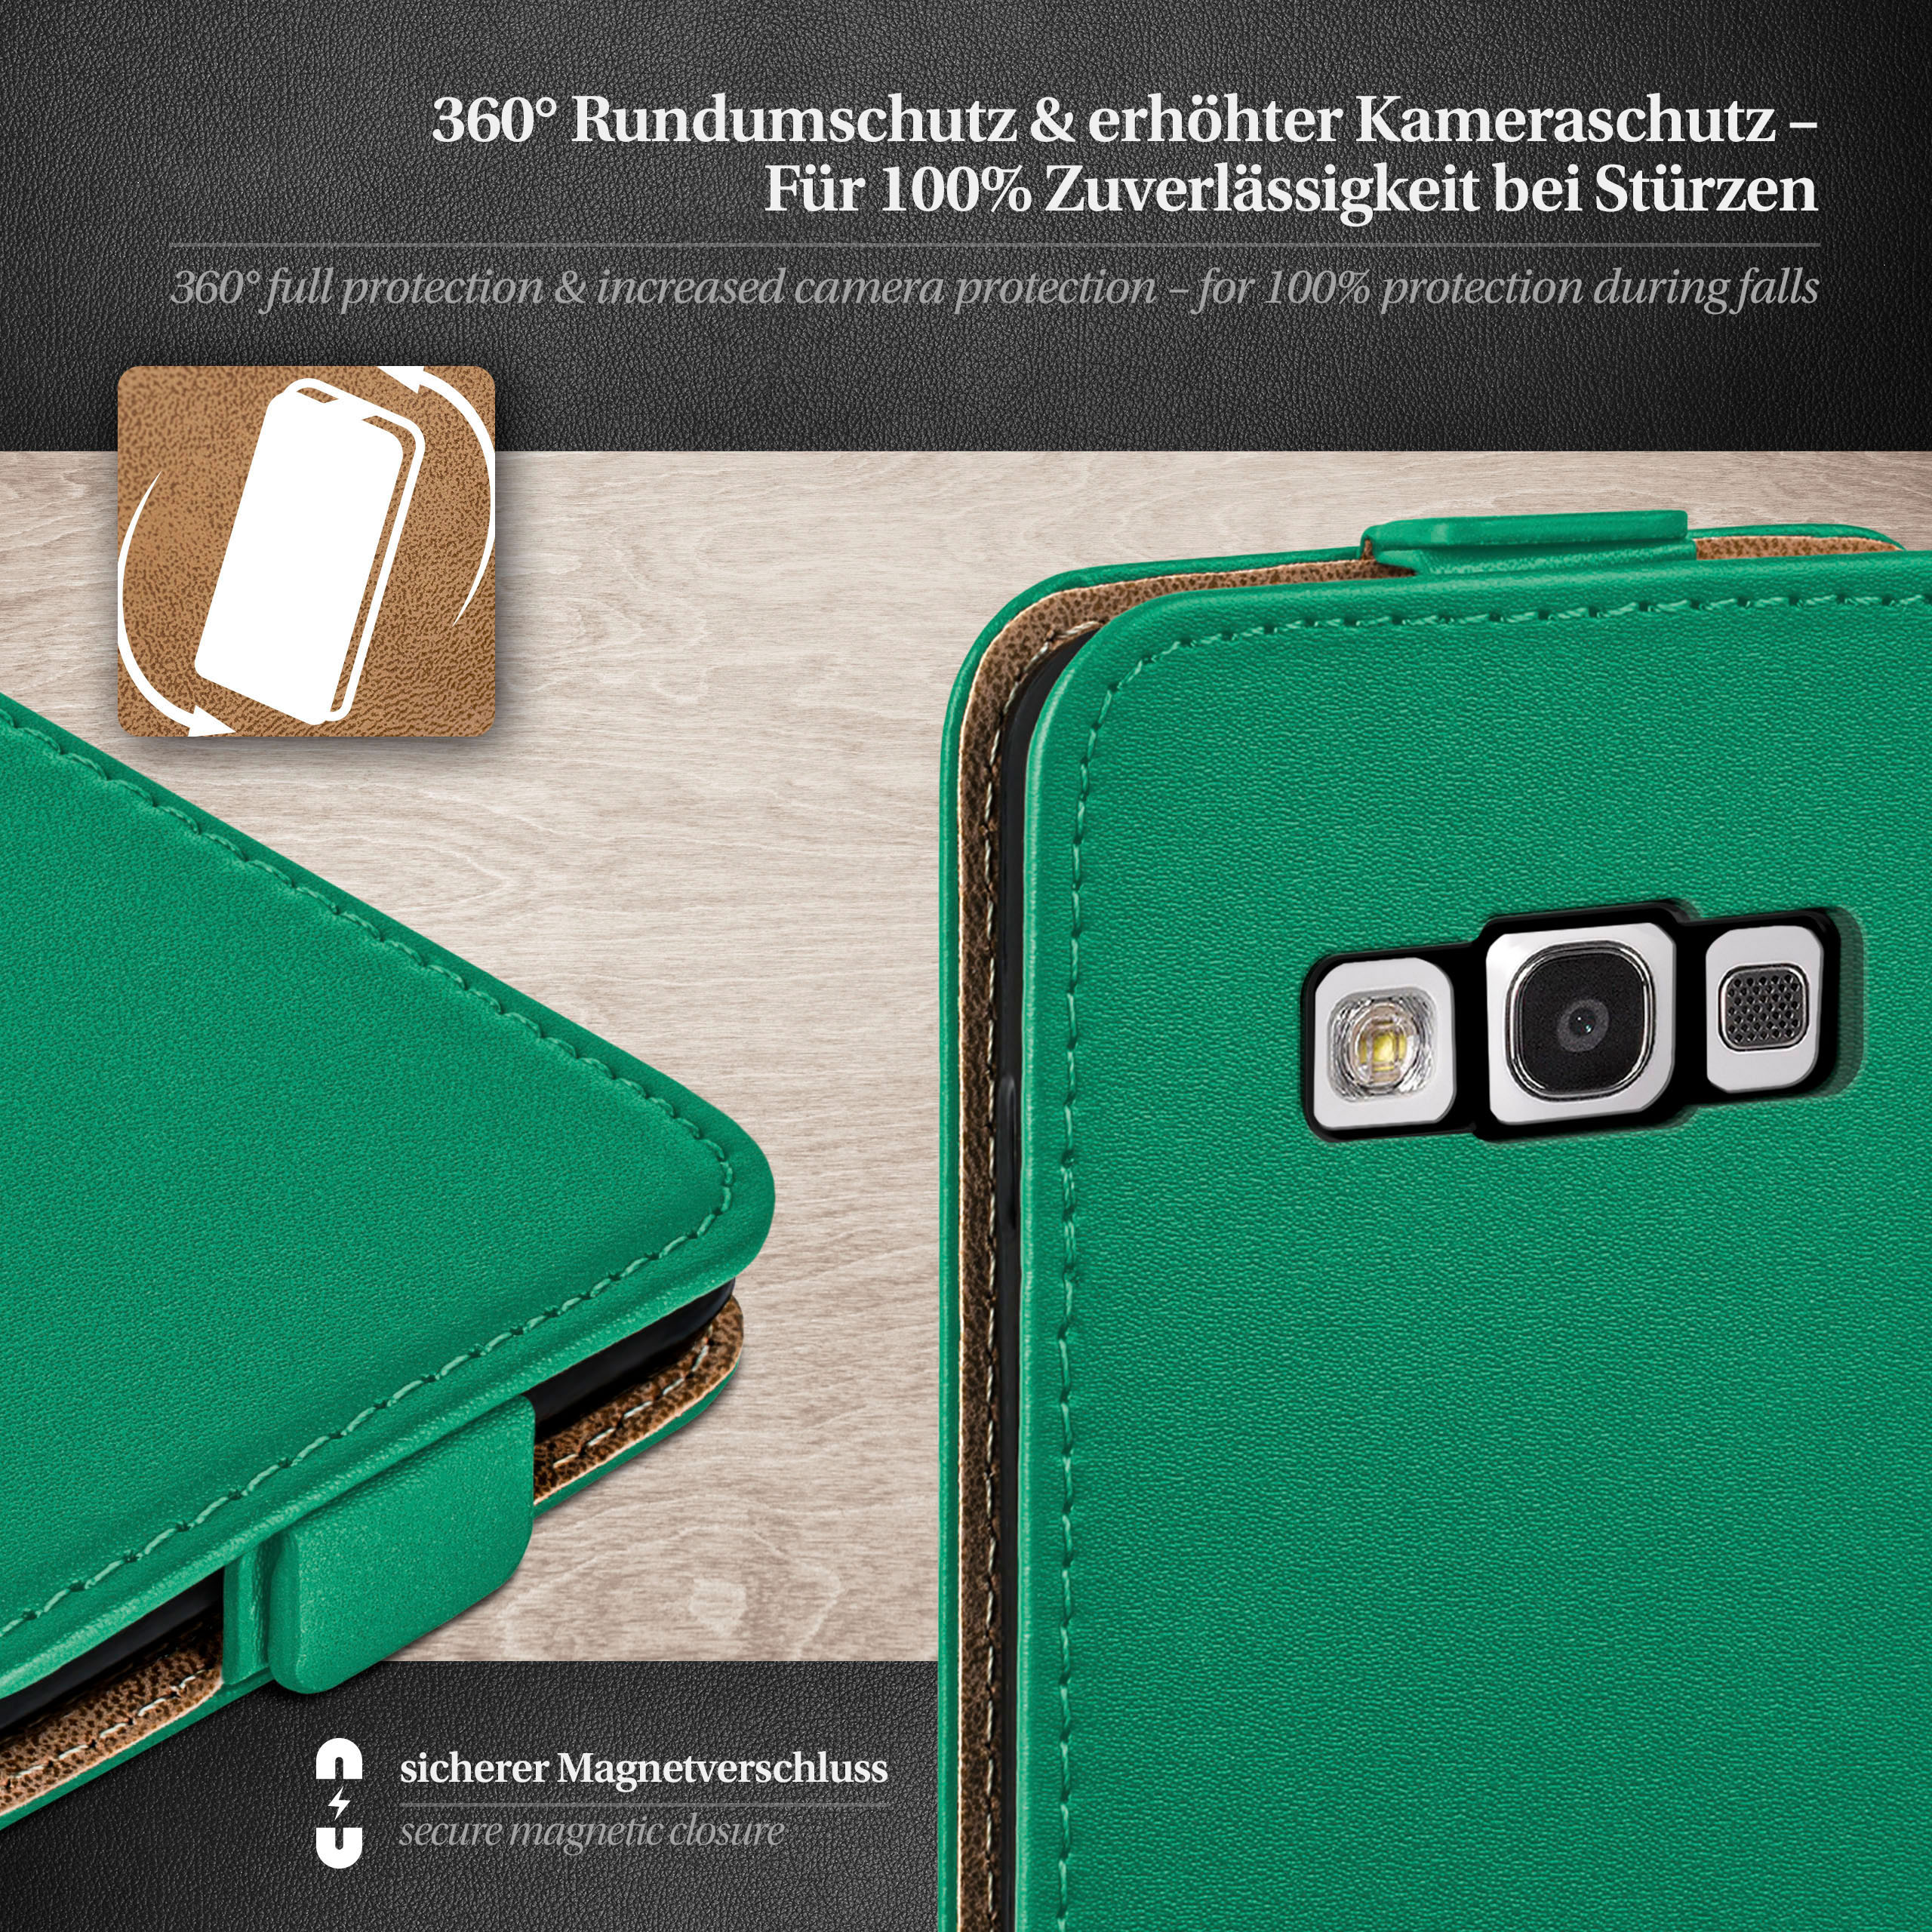 MOEX Flip Galaxy Emerald-Green Cover, Samsung, Neo, Case, / Flip S3 S3